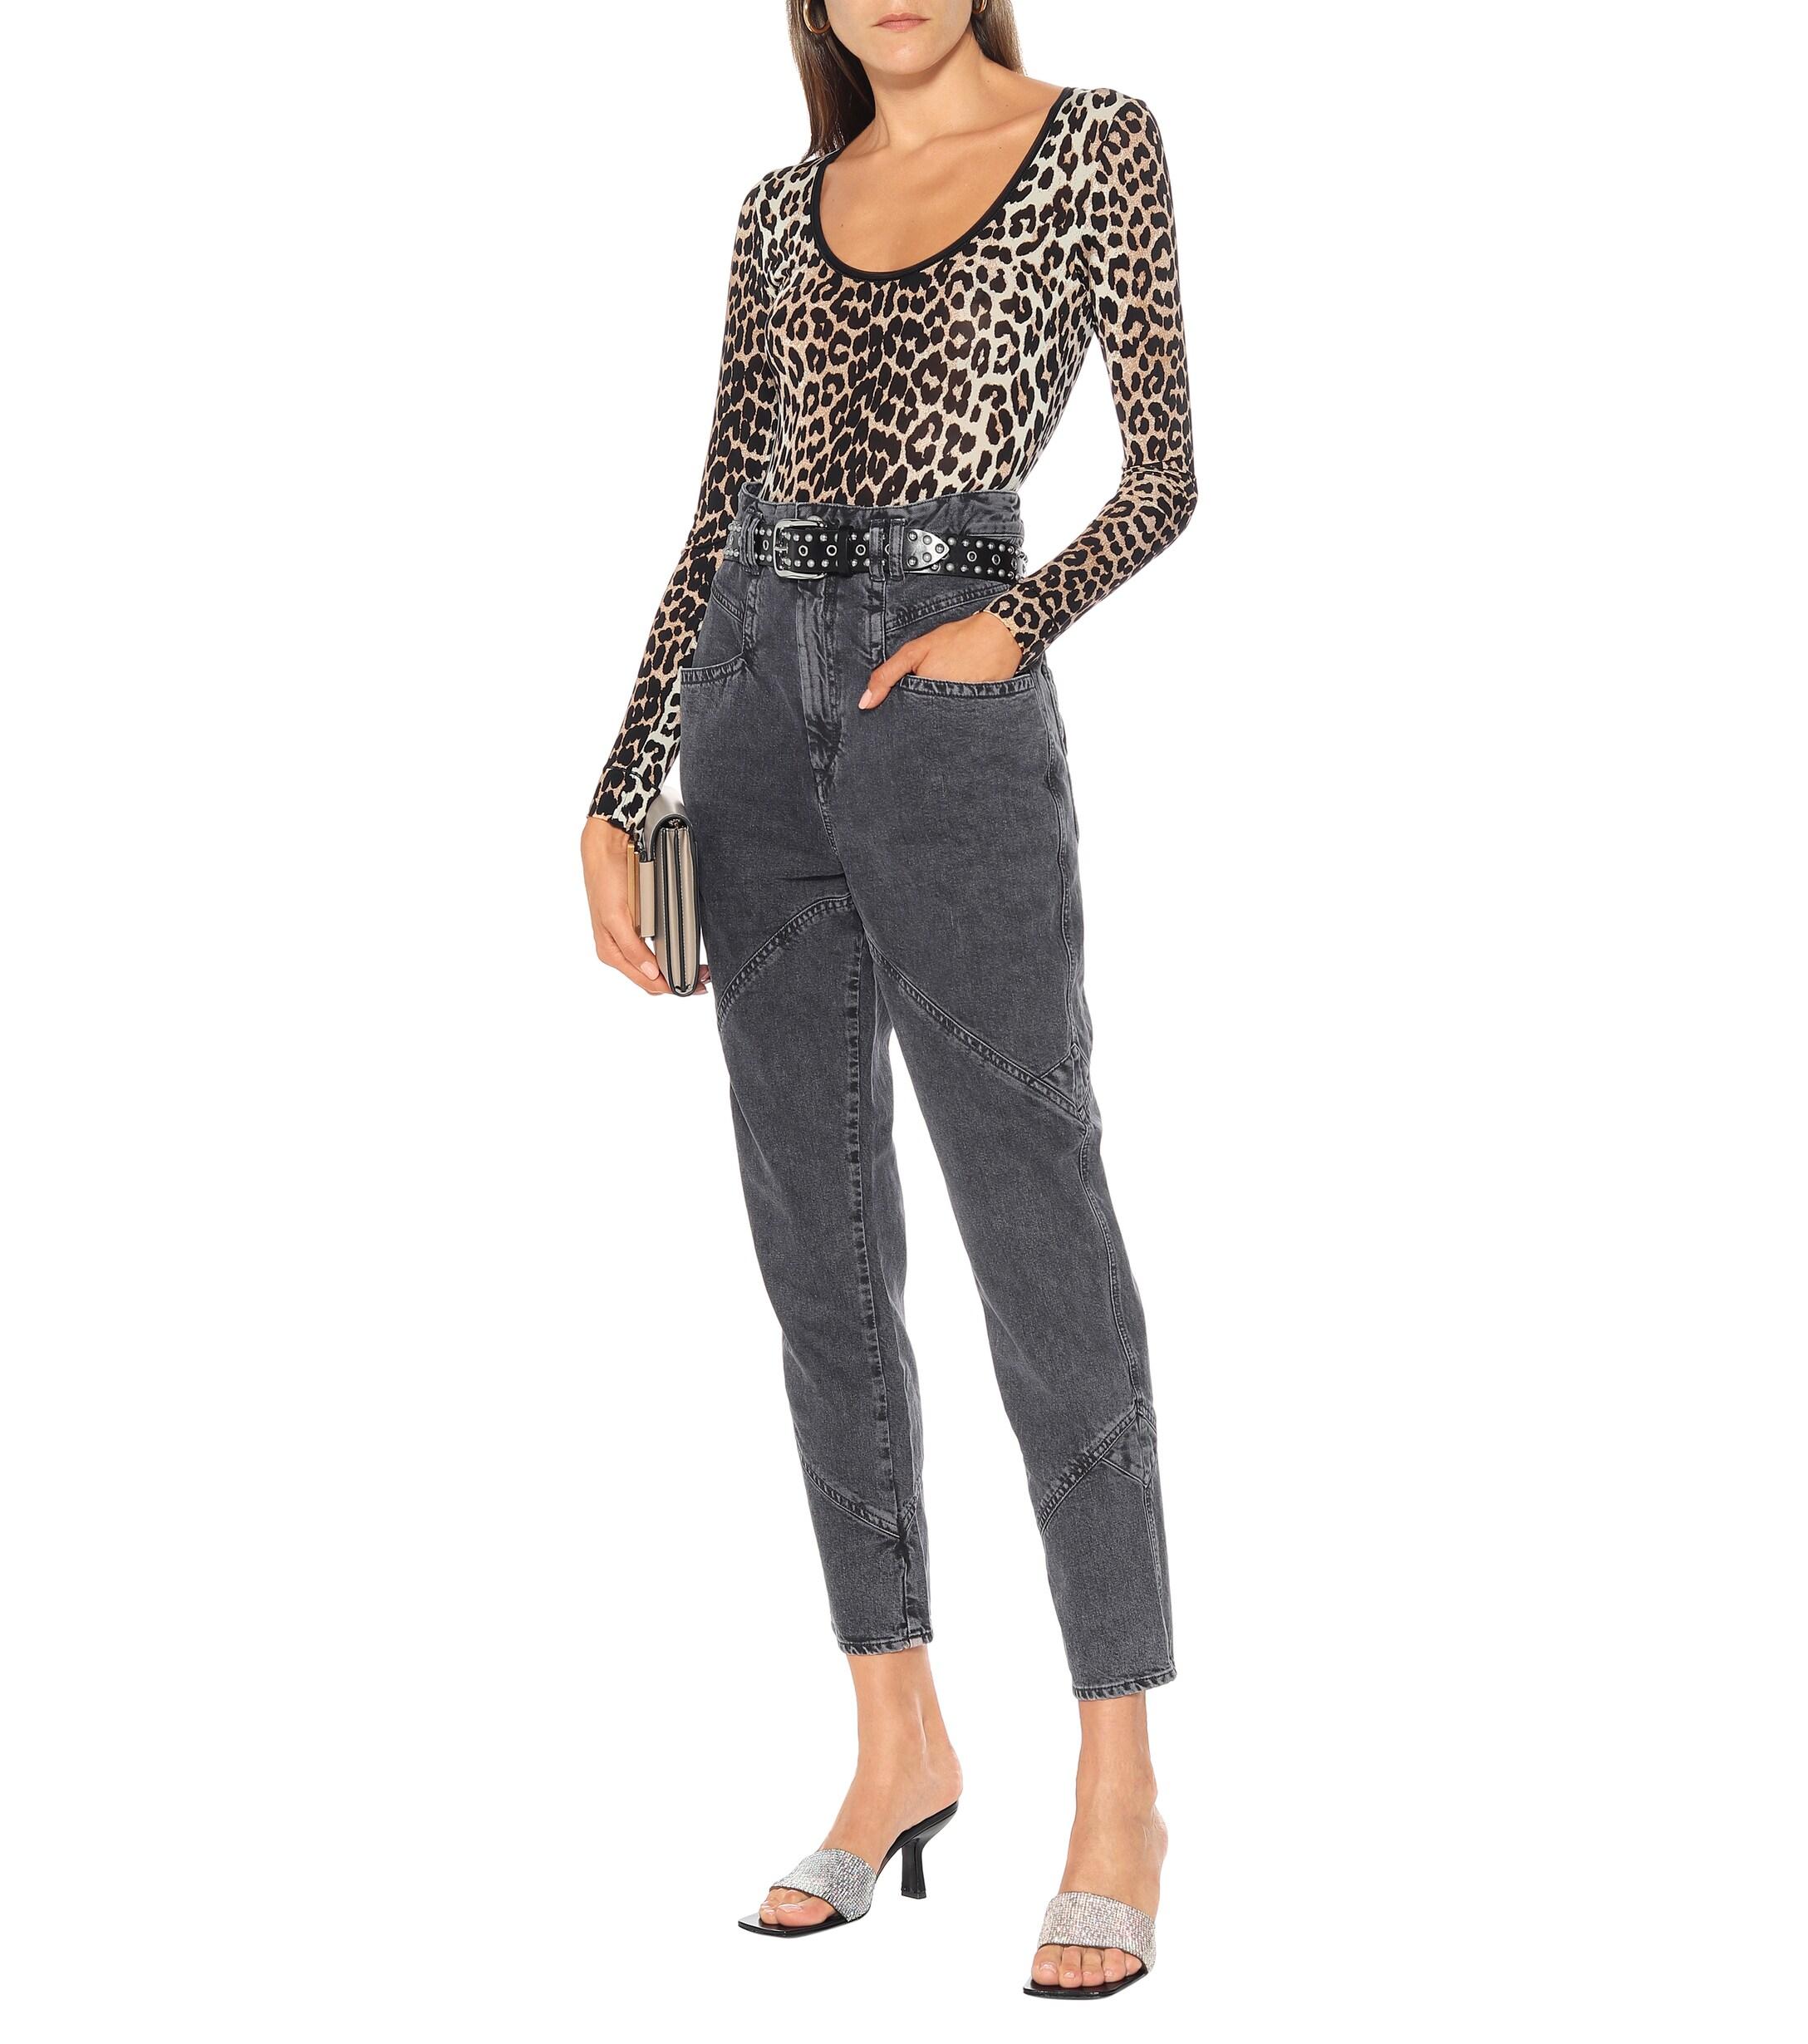 Ganni Synthetic Leopard-print Bodysuit in Brown - Lyst